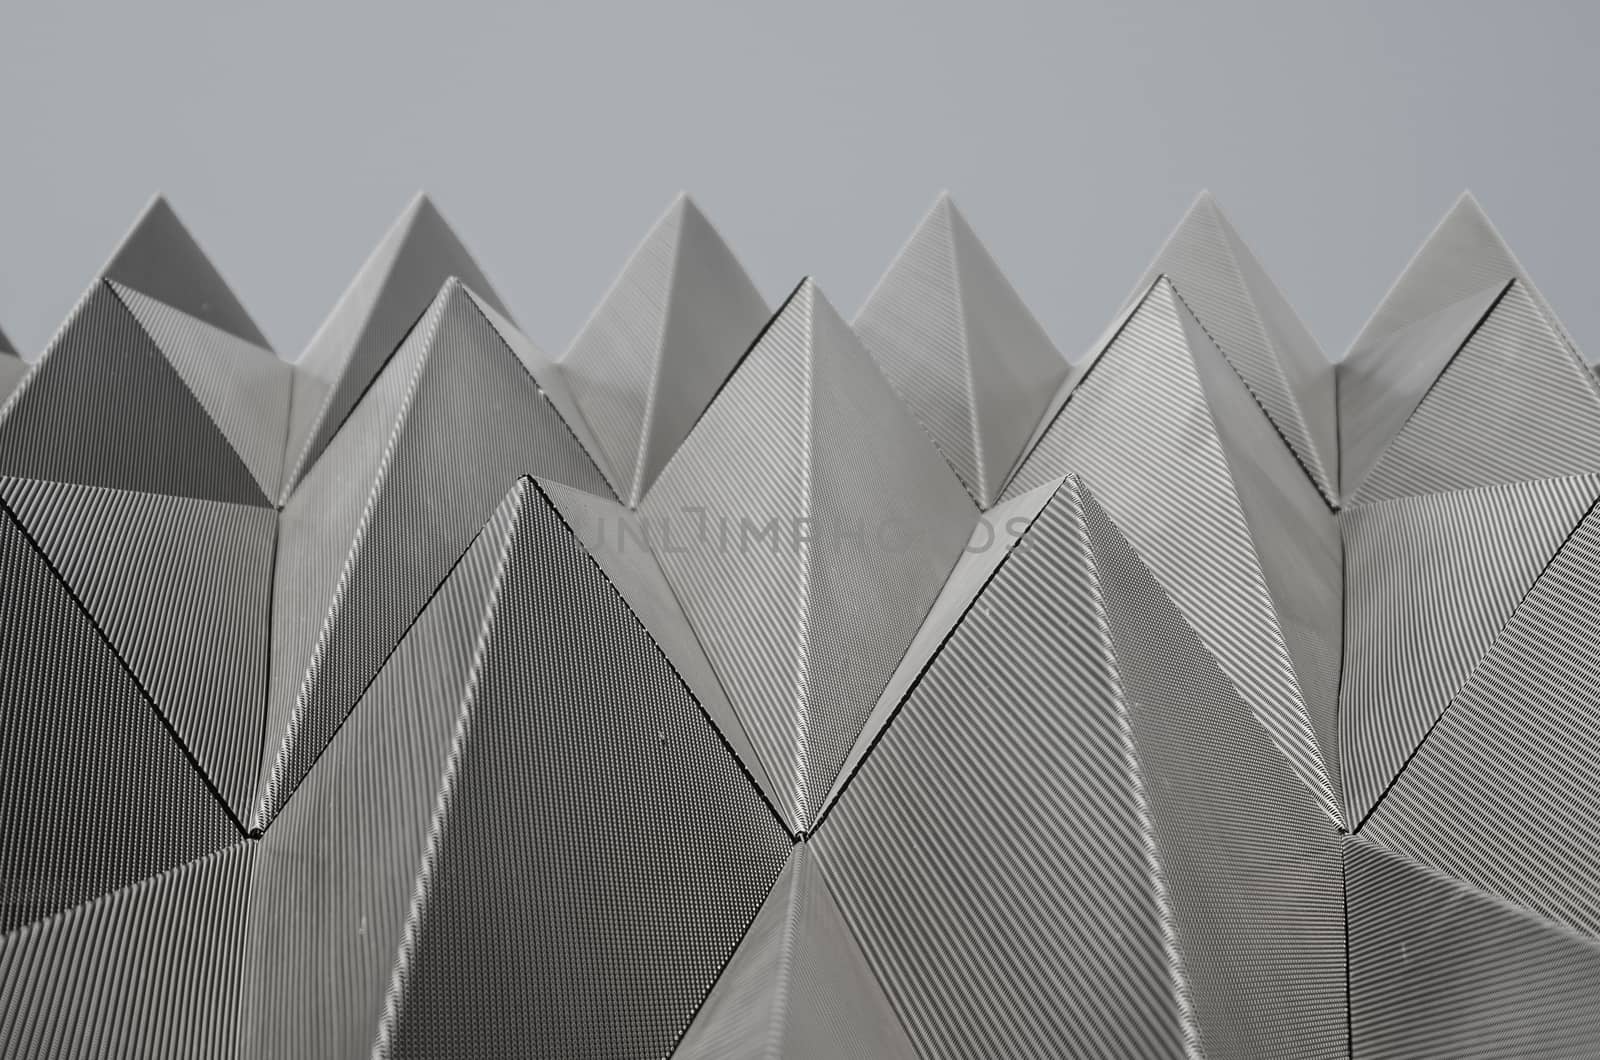 Metallic piramidal pattern in the Navarrabiomed building in Pamp by mikelju